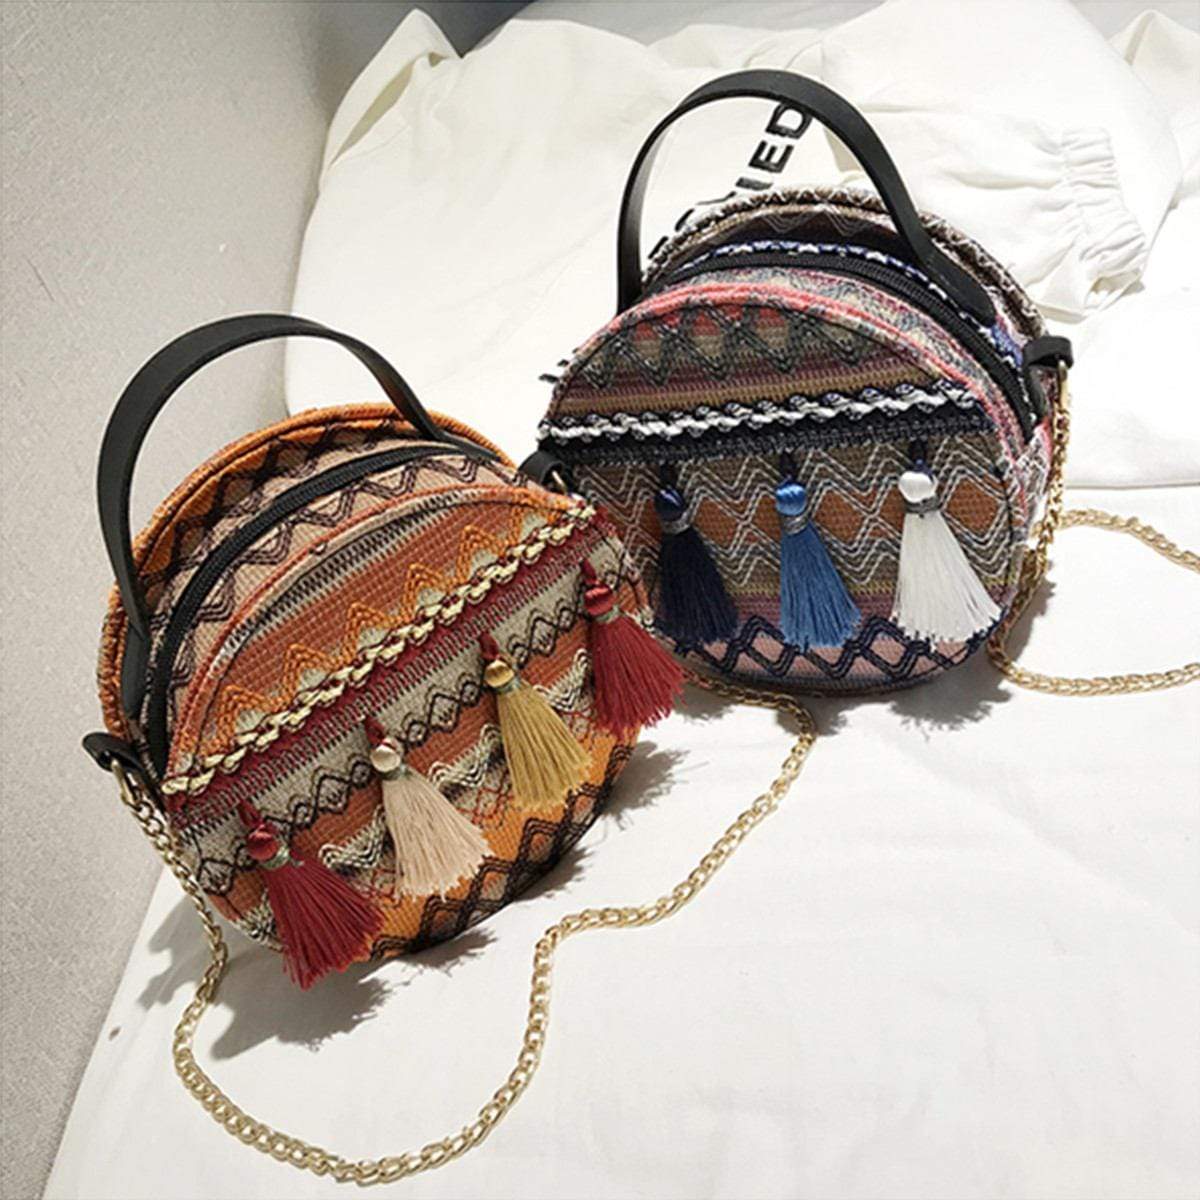 Shop Bohemian Handbags Online